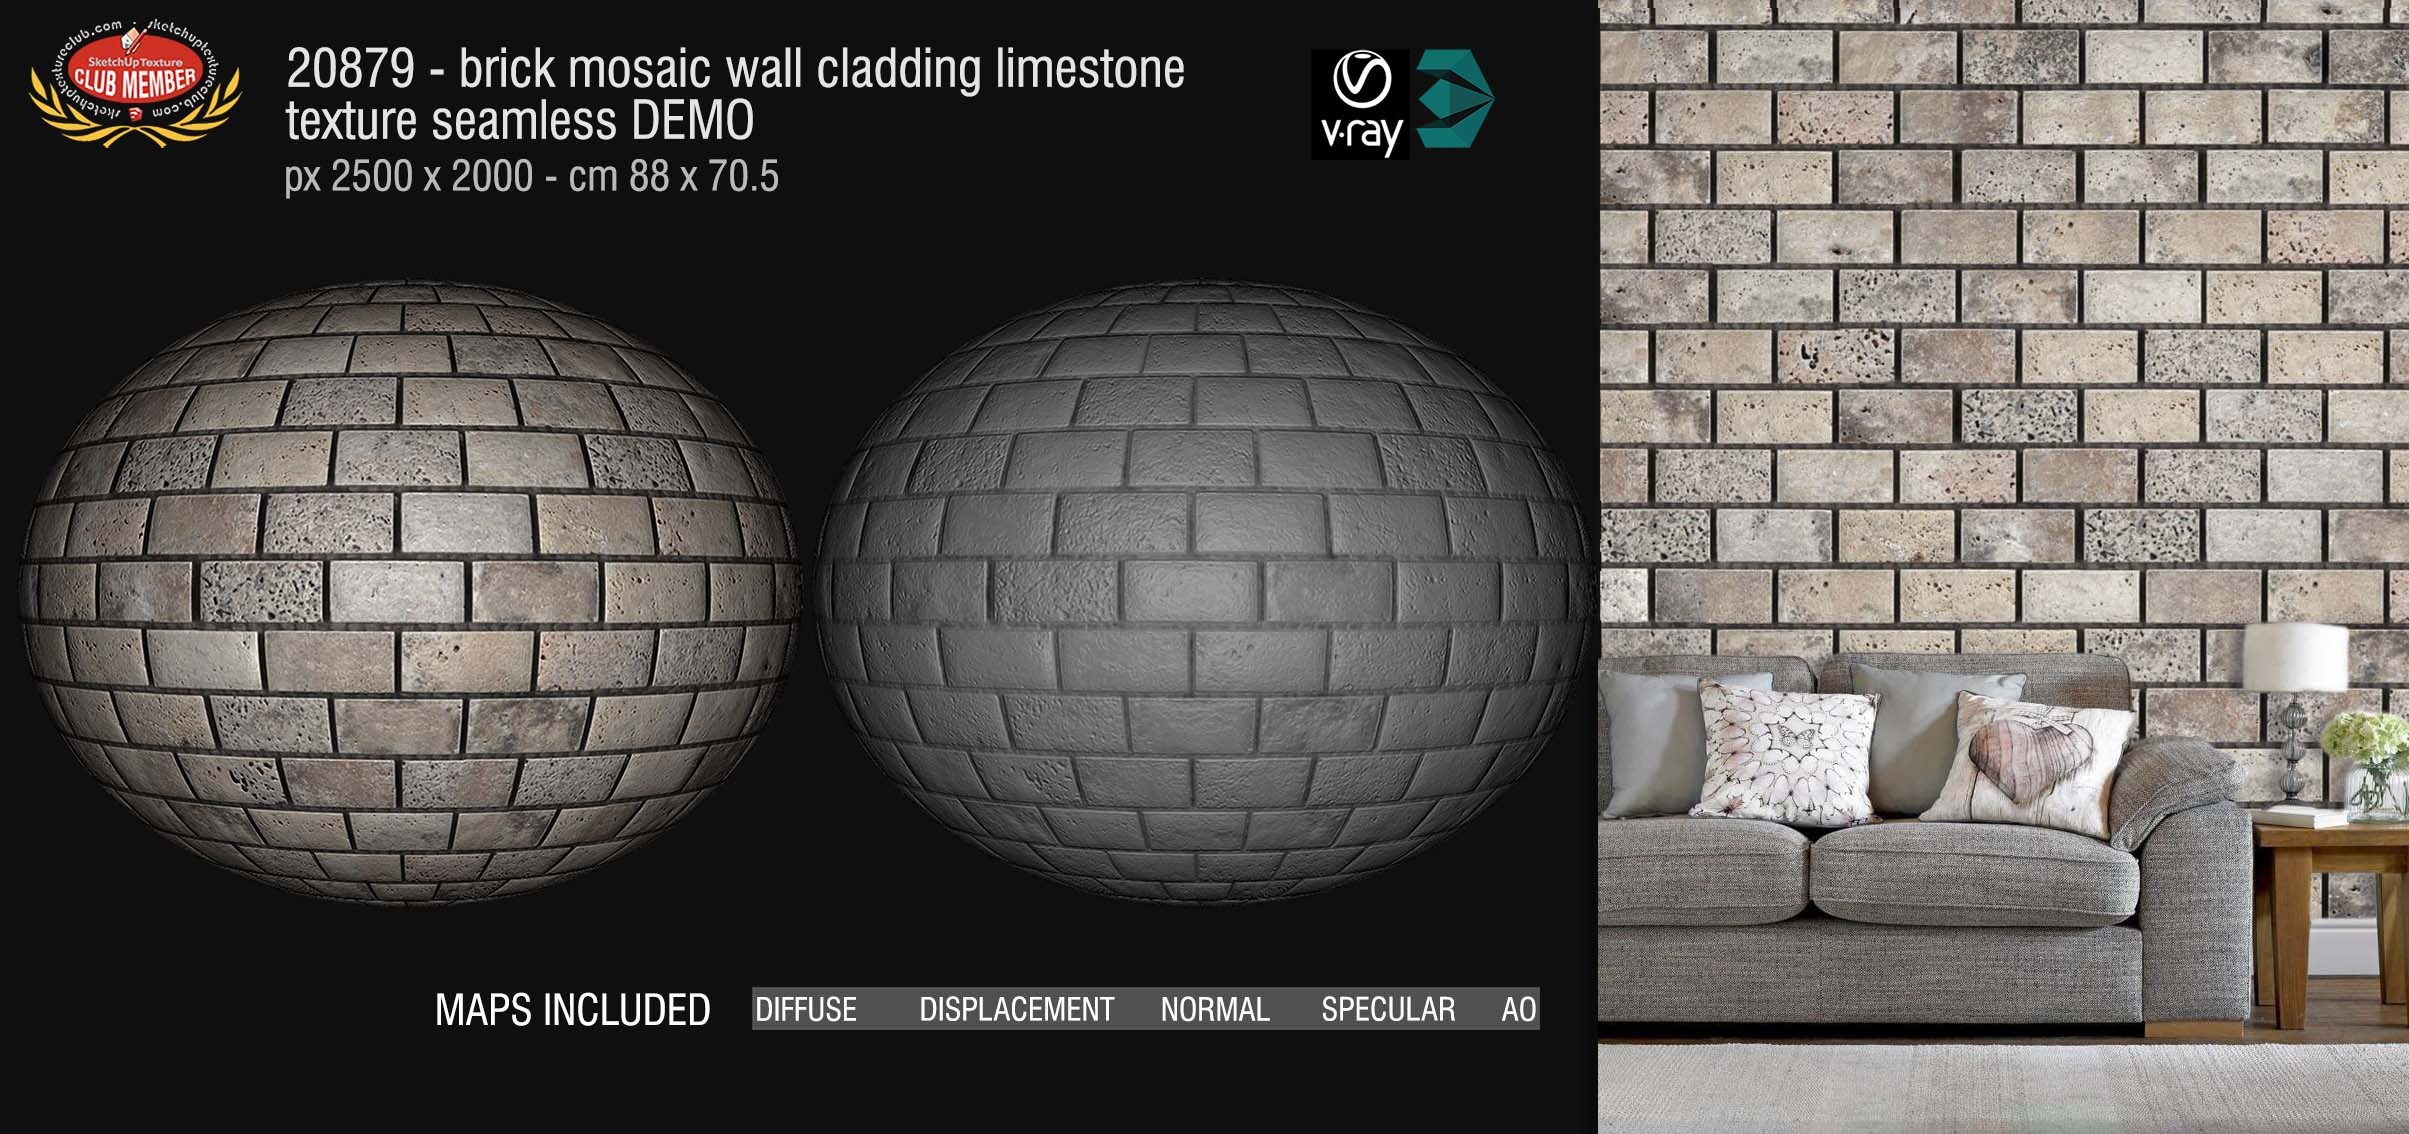 CLICK TO ENLARGE 20879 Brick mosaic wall cladding limestone DEMO